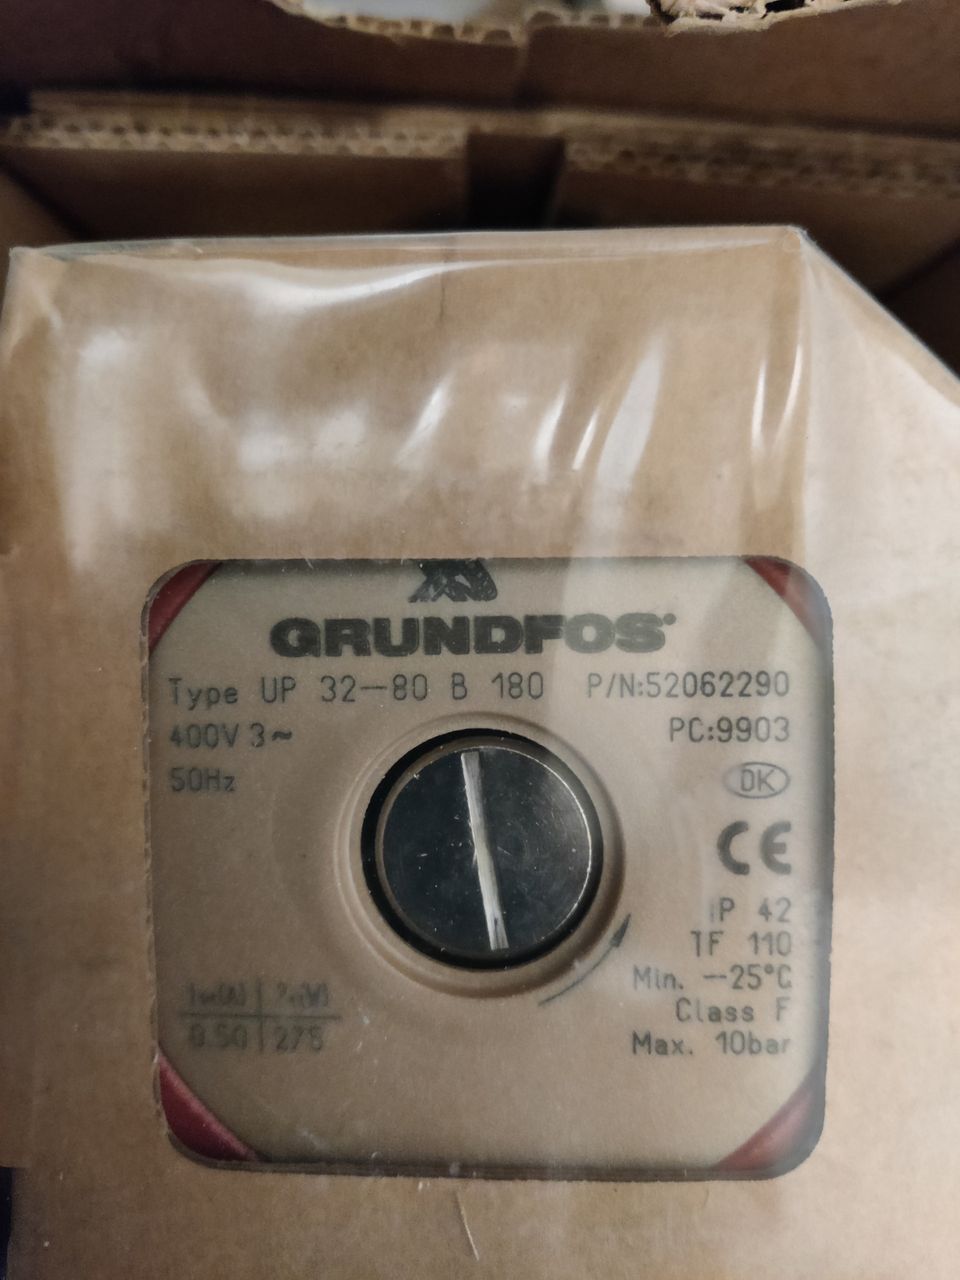 Grundfos up 32-80 B180